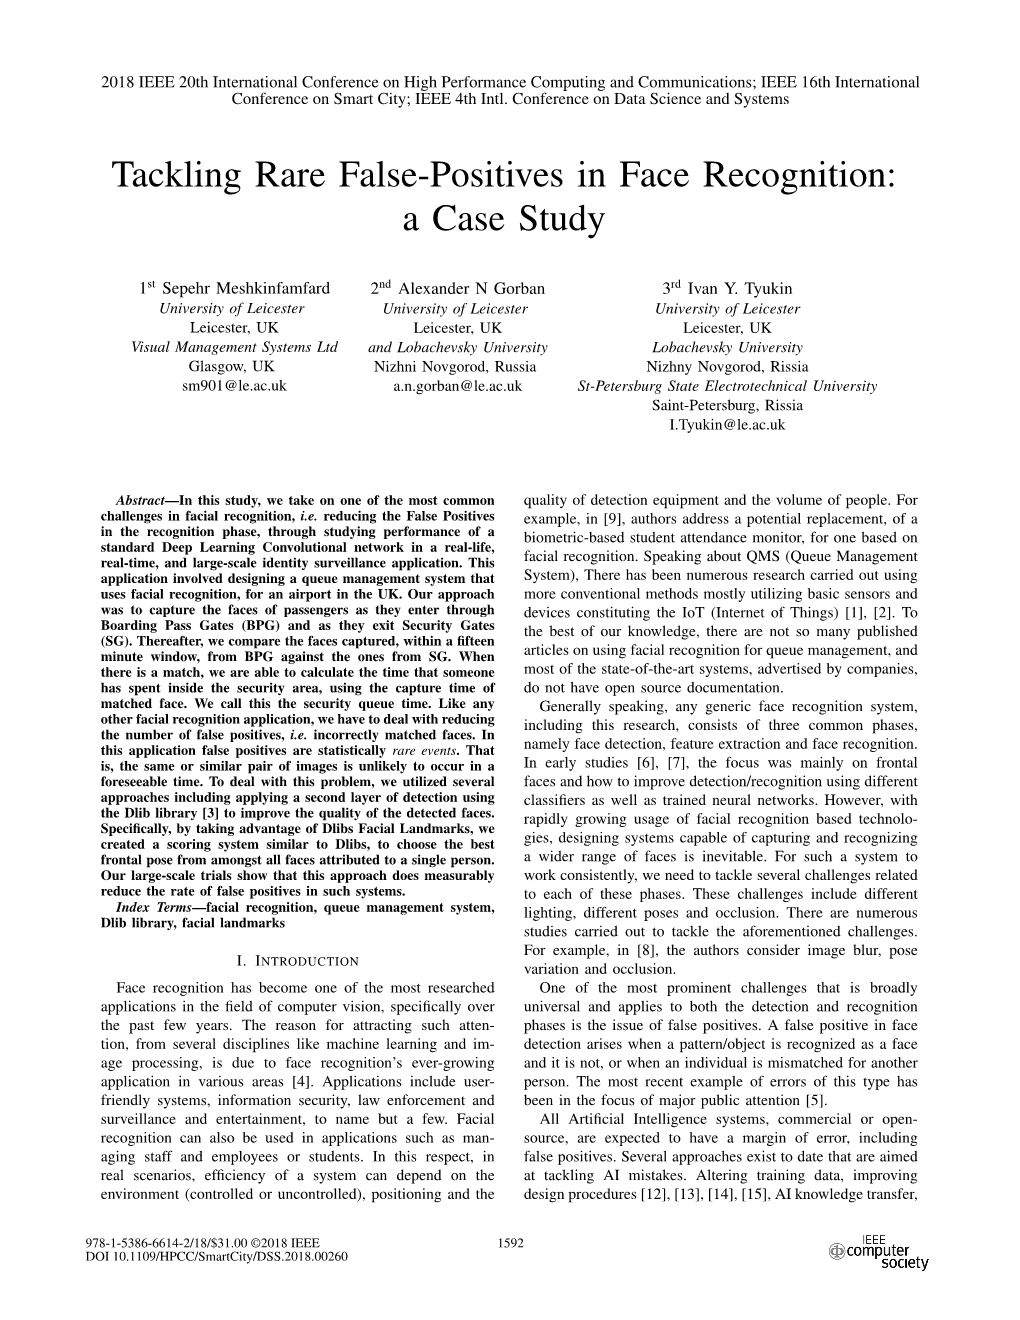 Tackling Rare False-Positives in Face Recognition: a Case Study